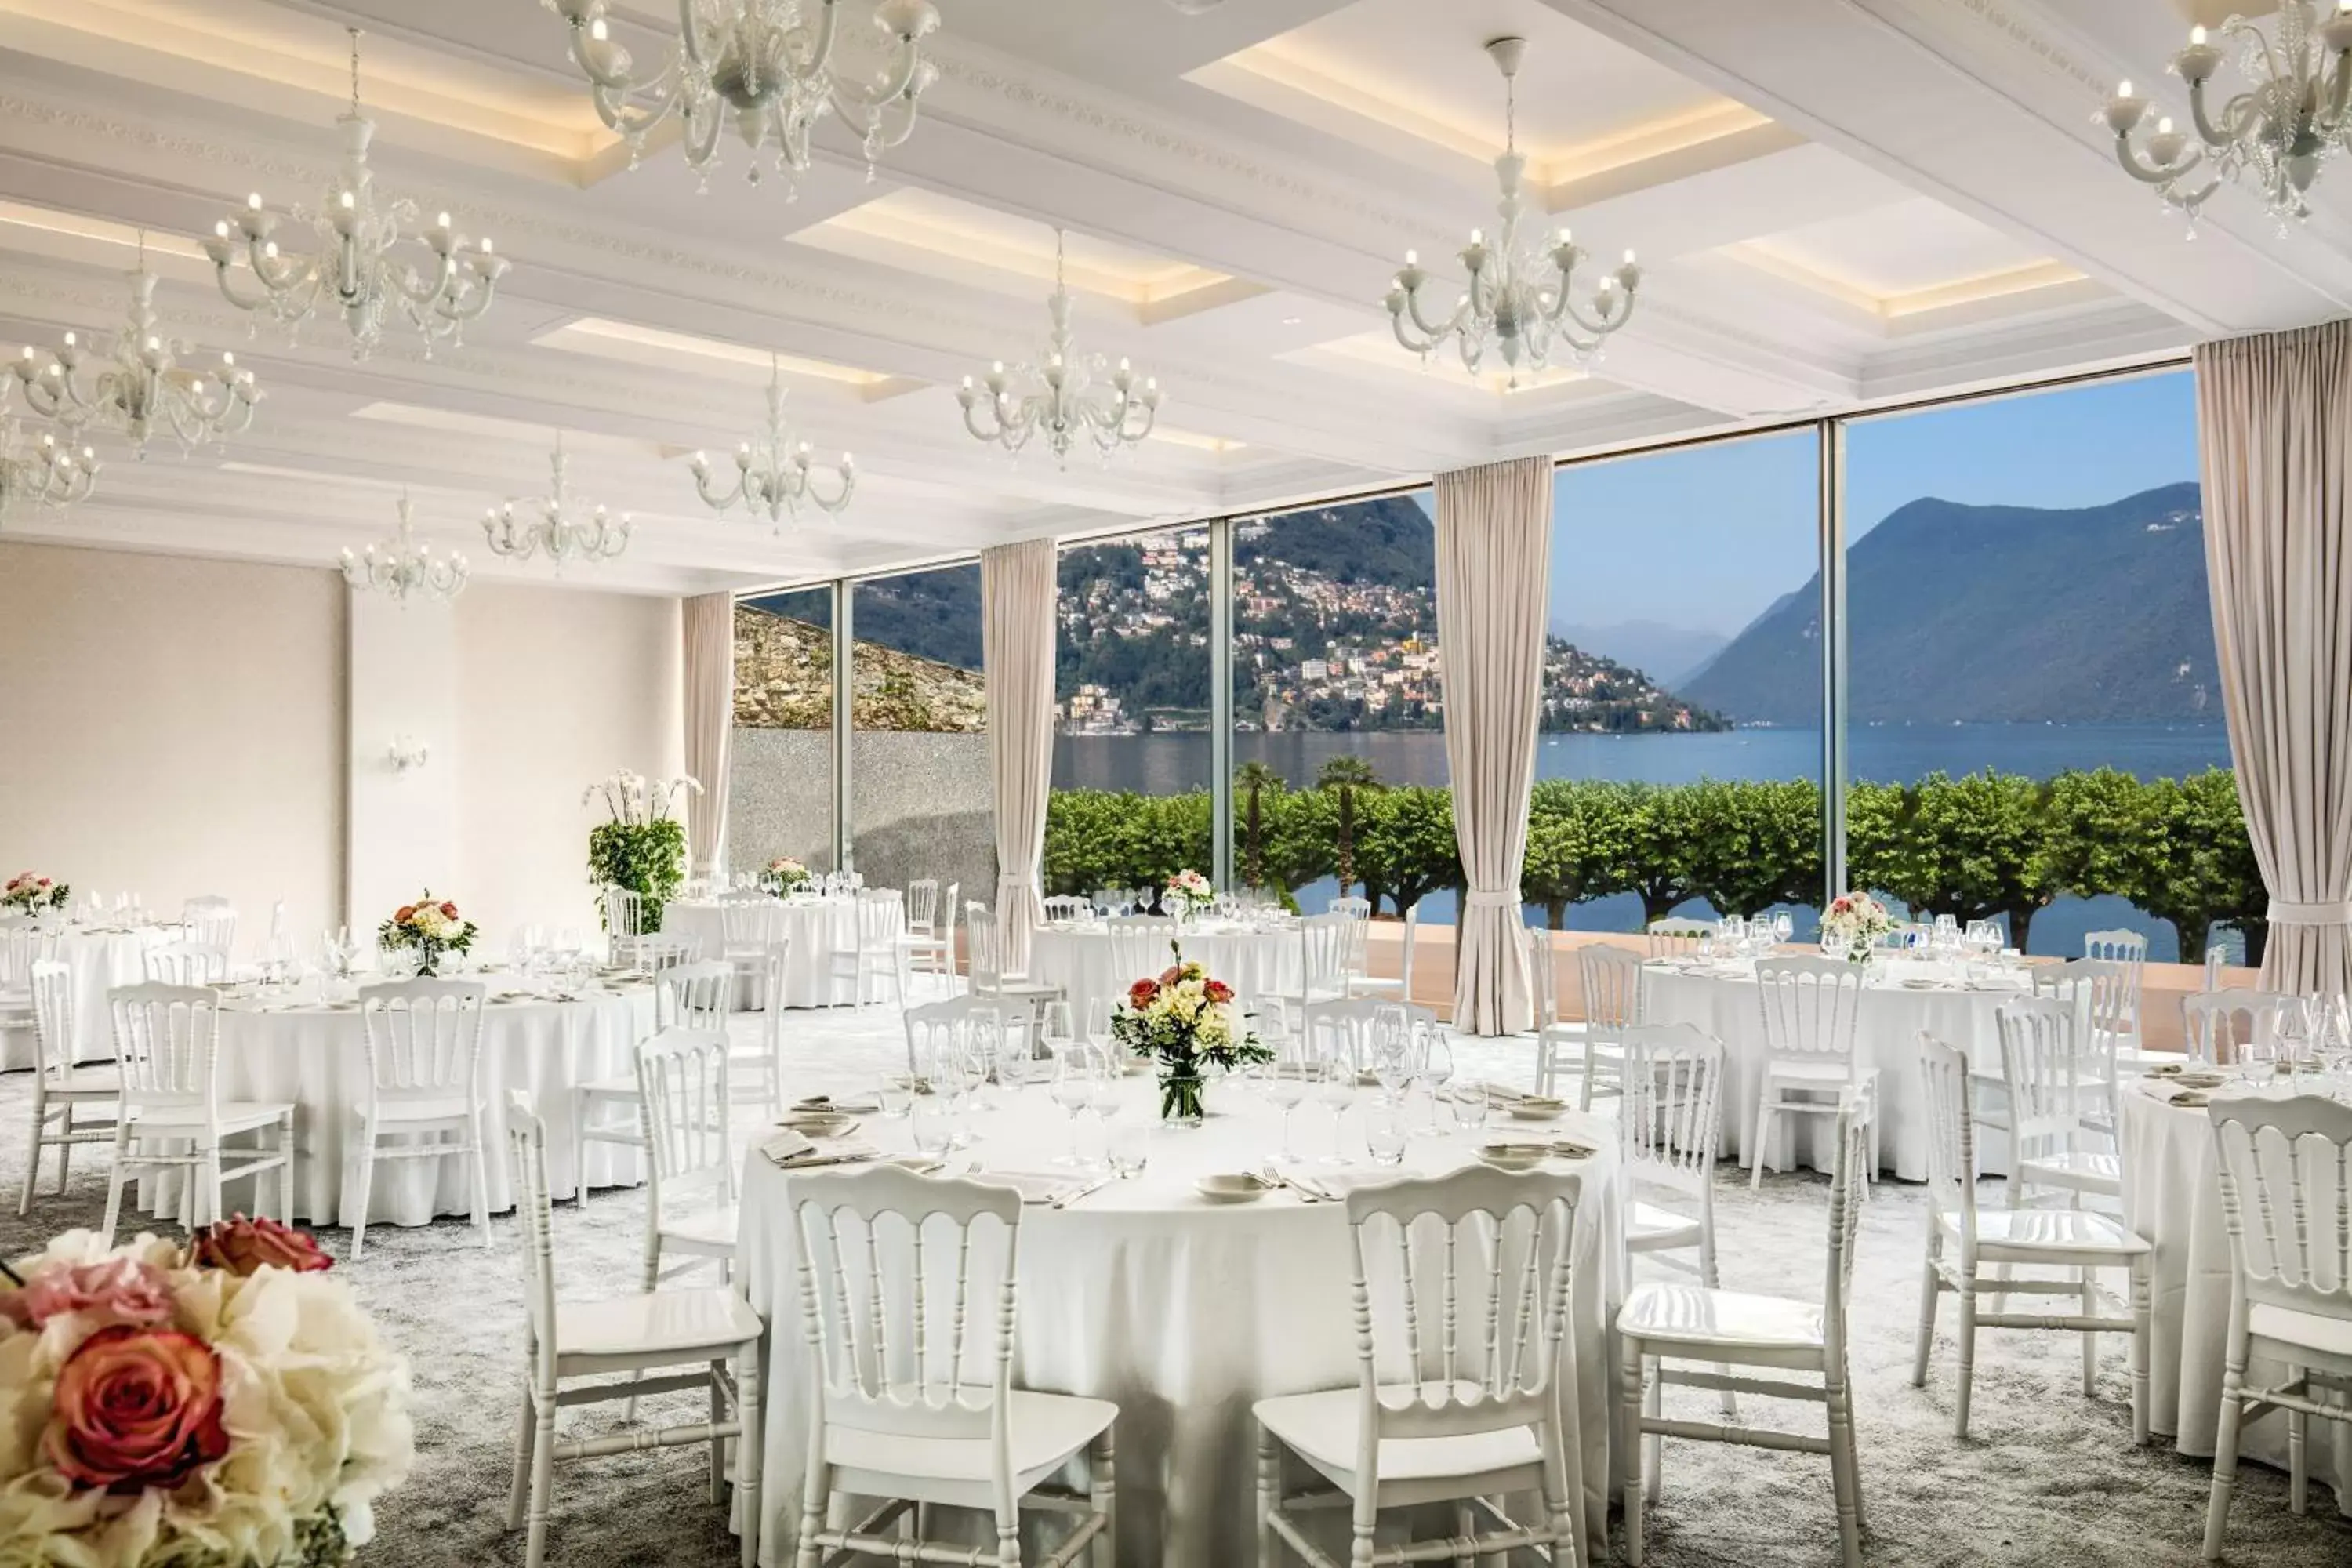 Banquet/Function facilities, Banquet Facilities in Hotel Splendide Royal